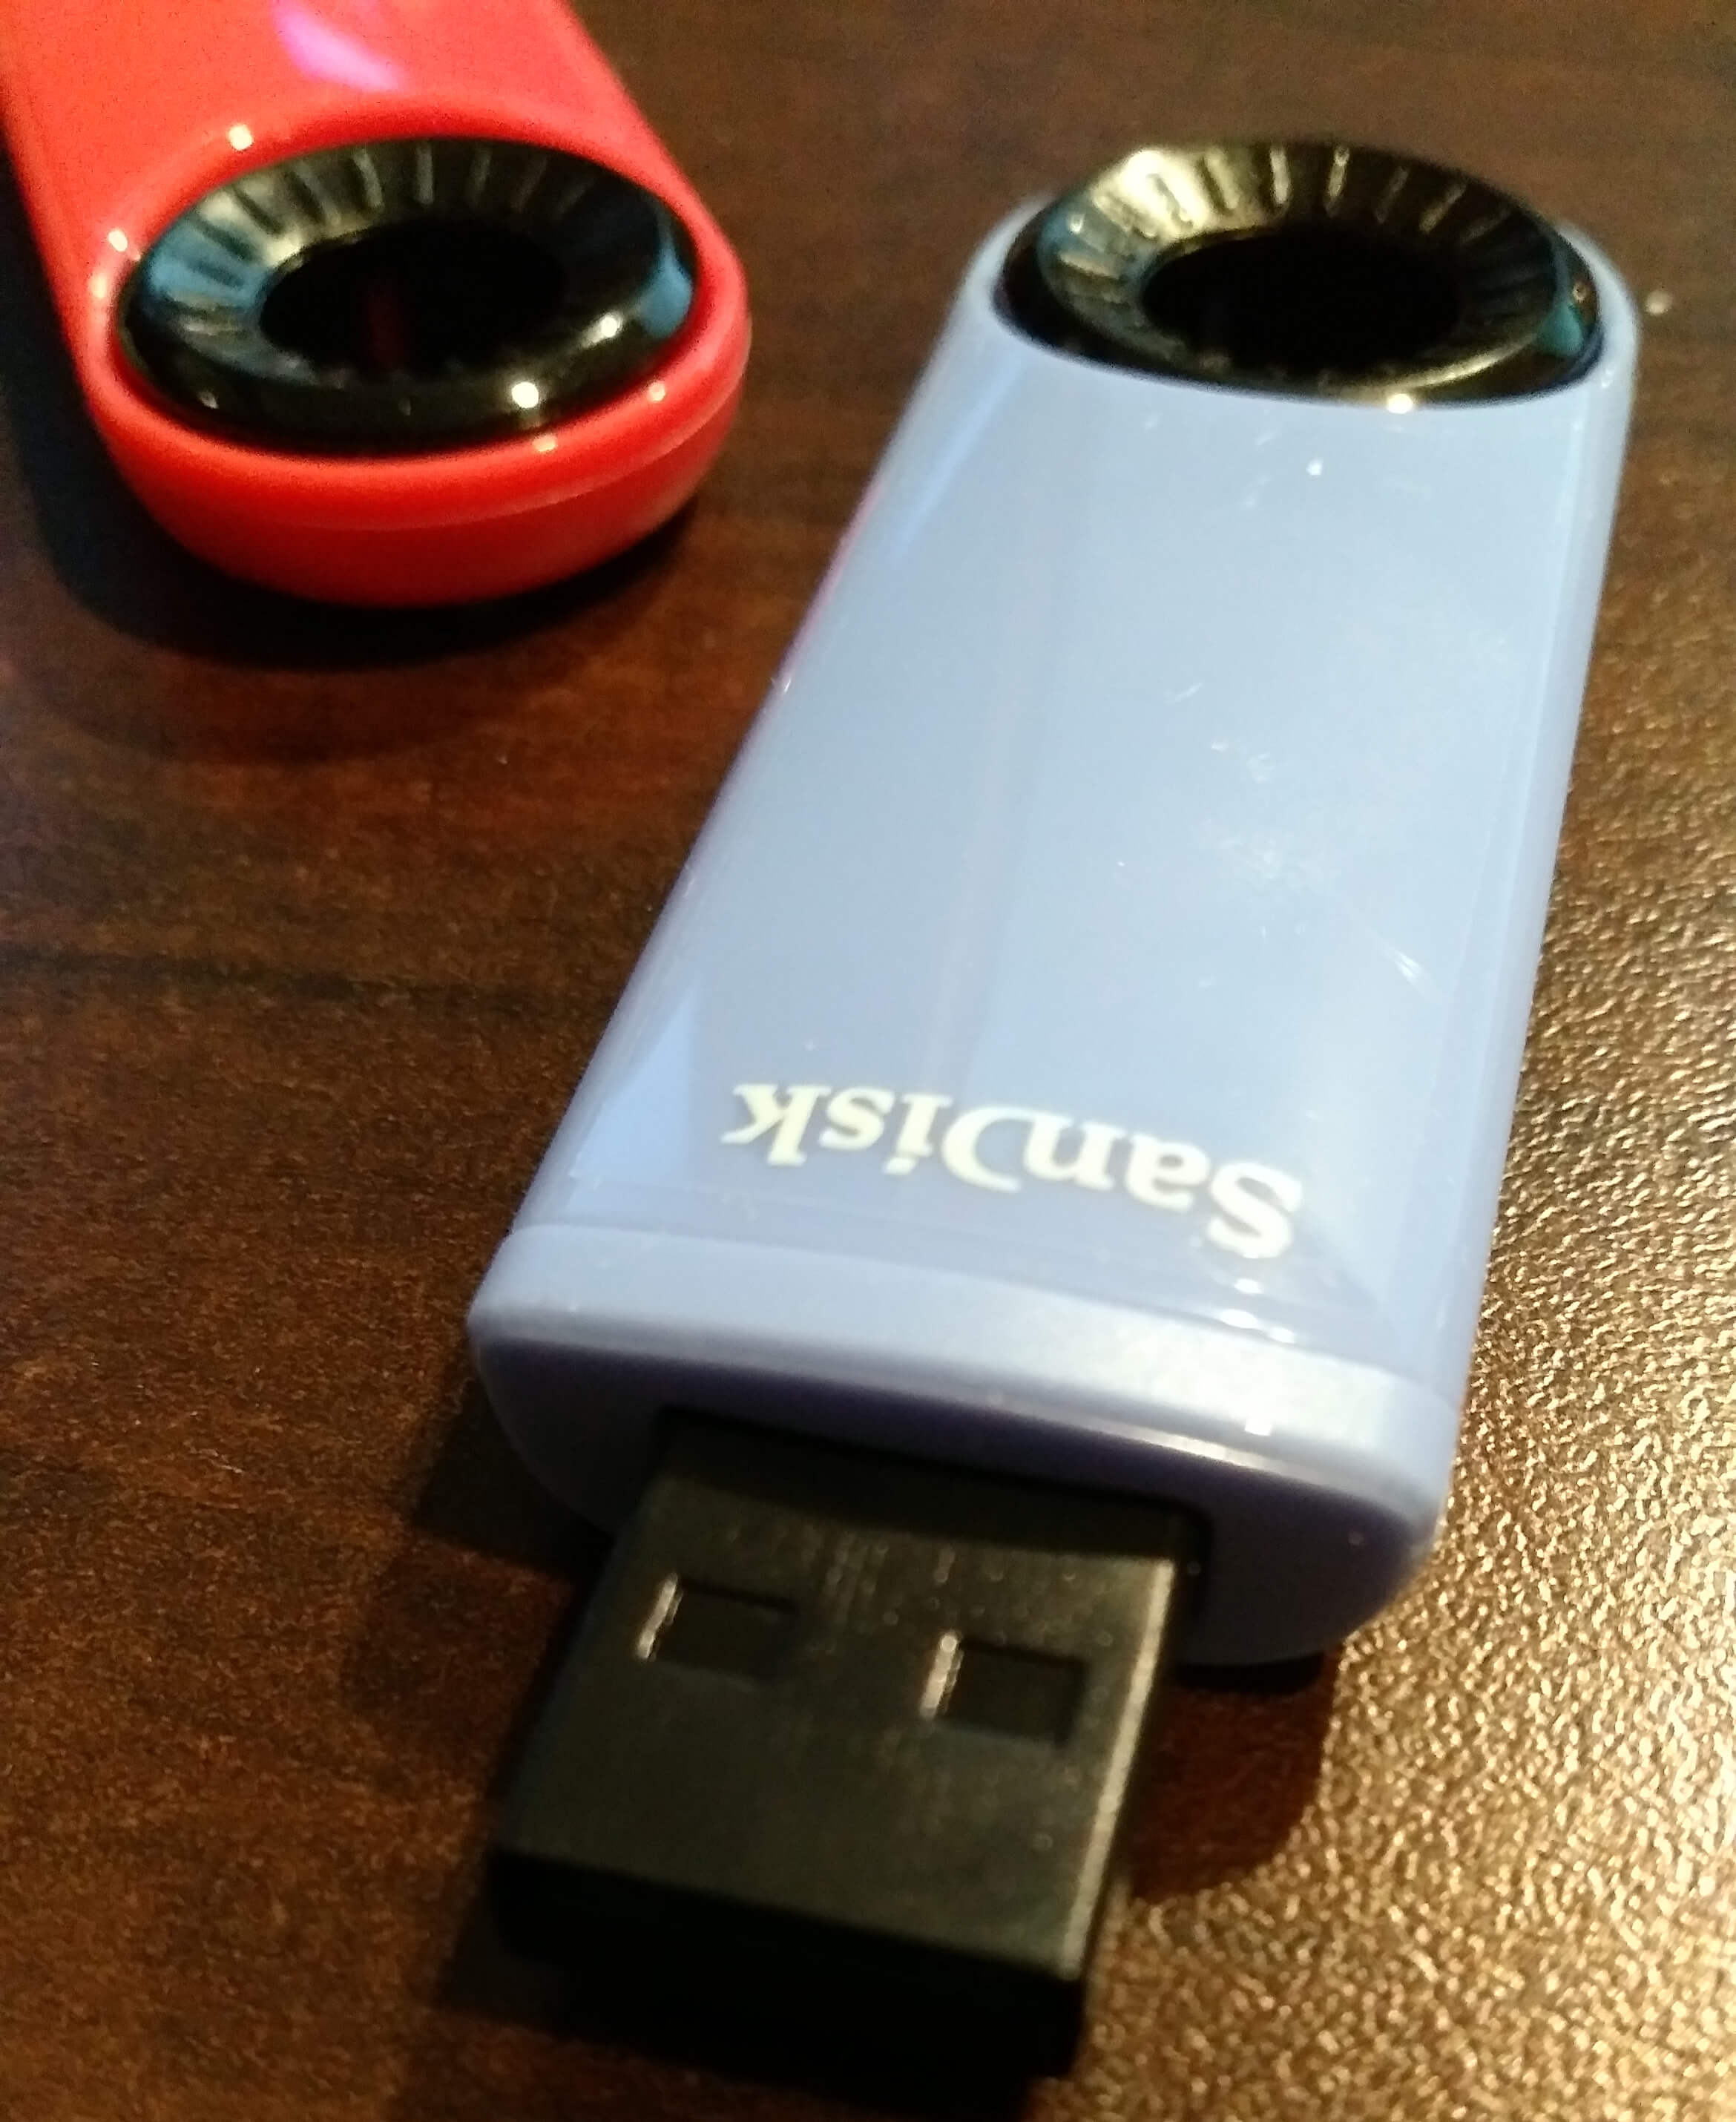 SanDisk Cruzer® Dial USB Flash Drive